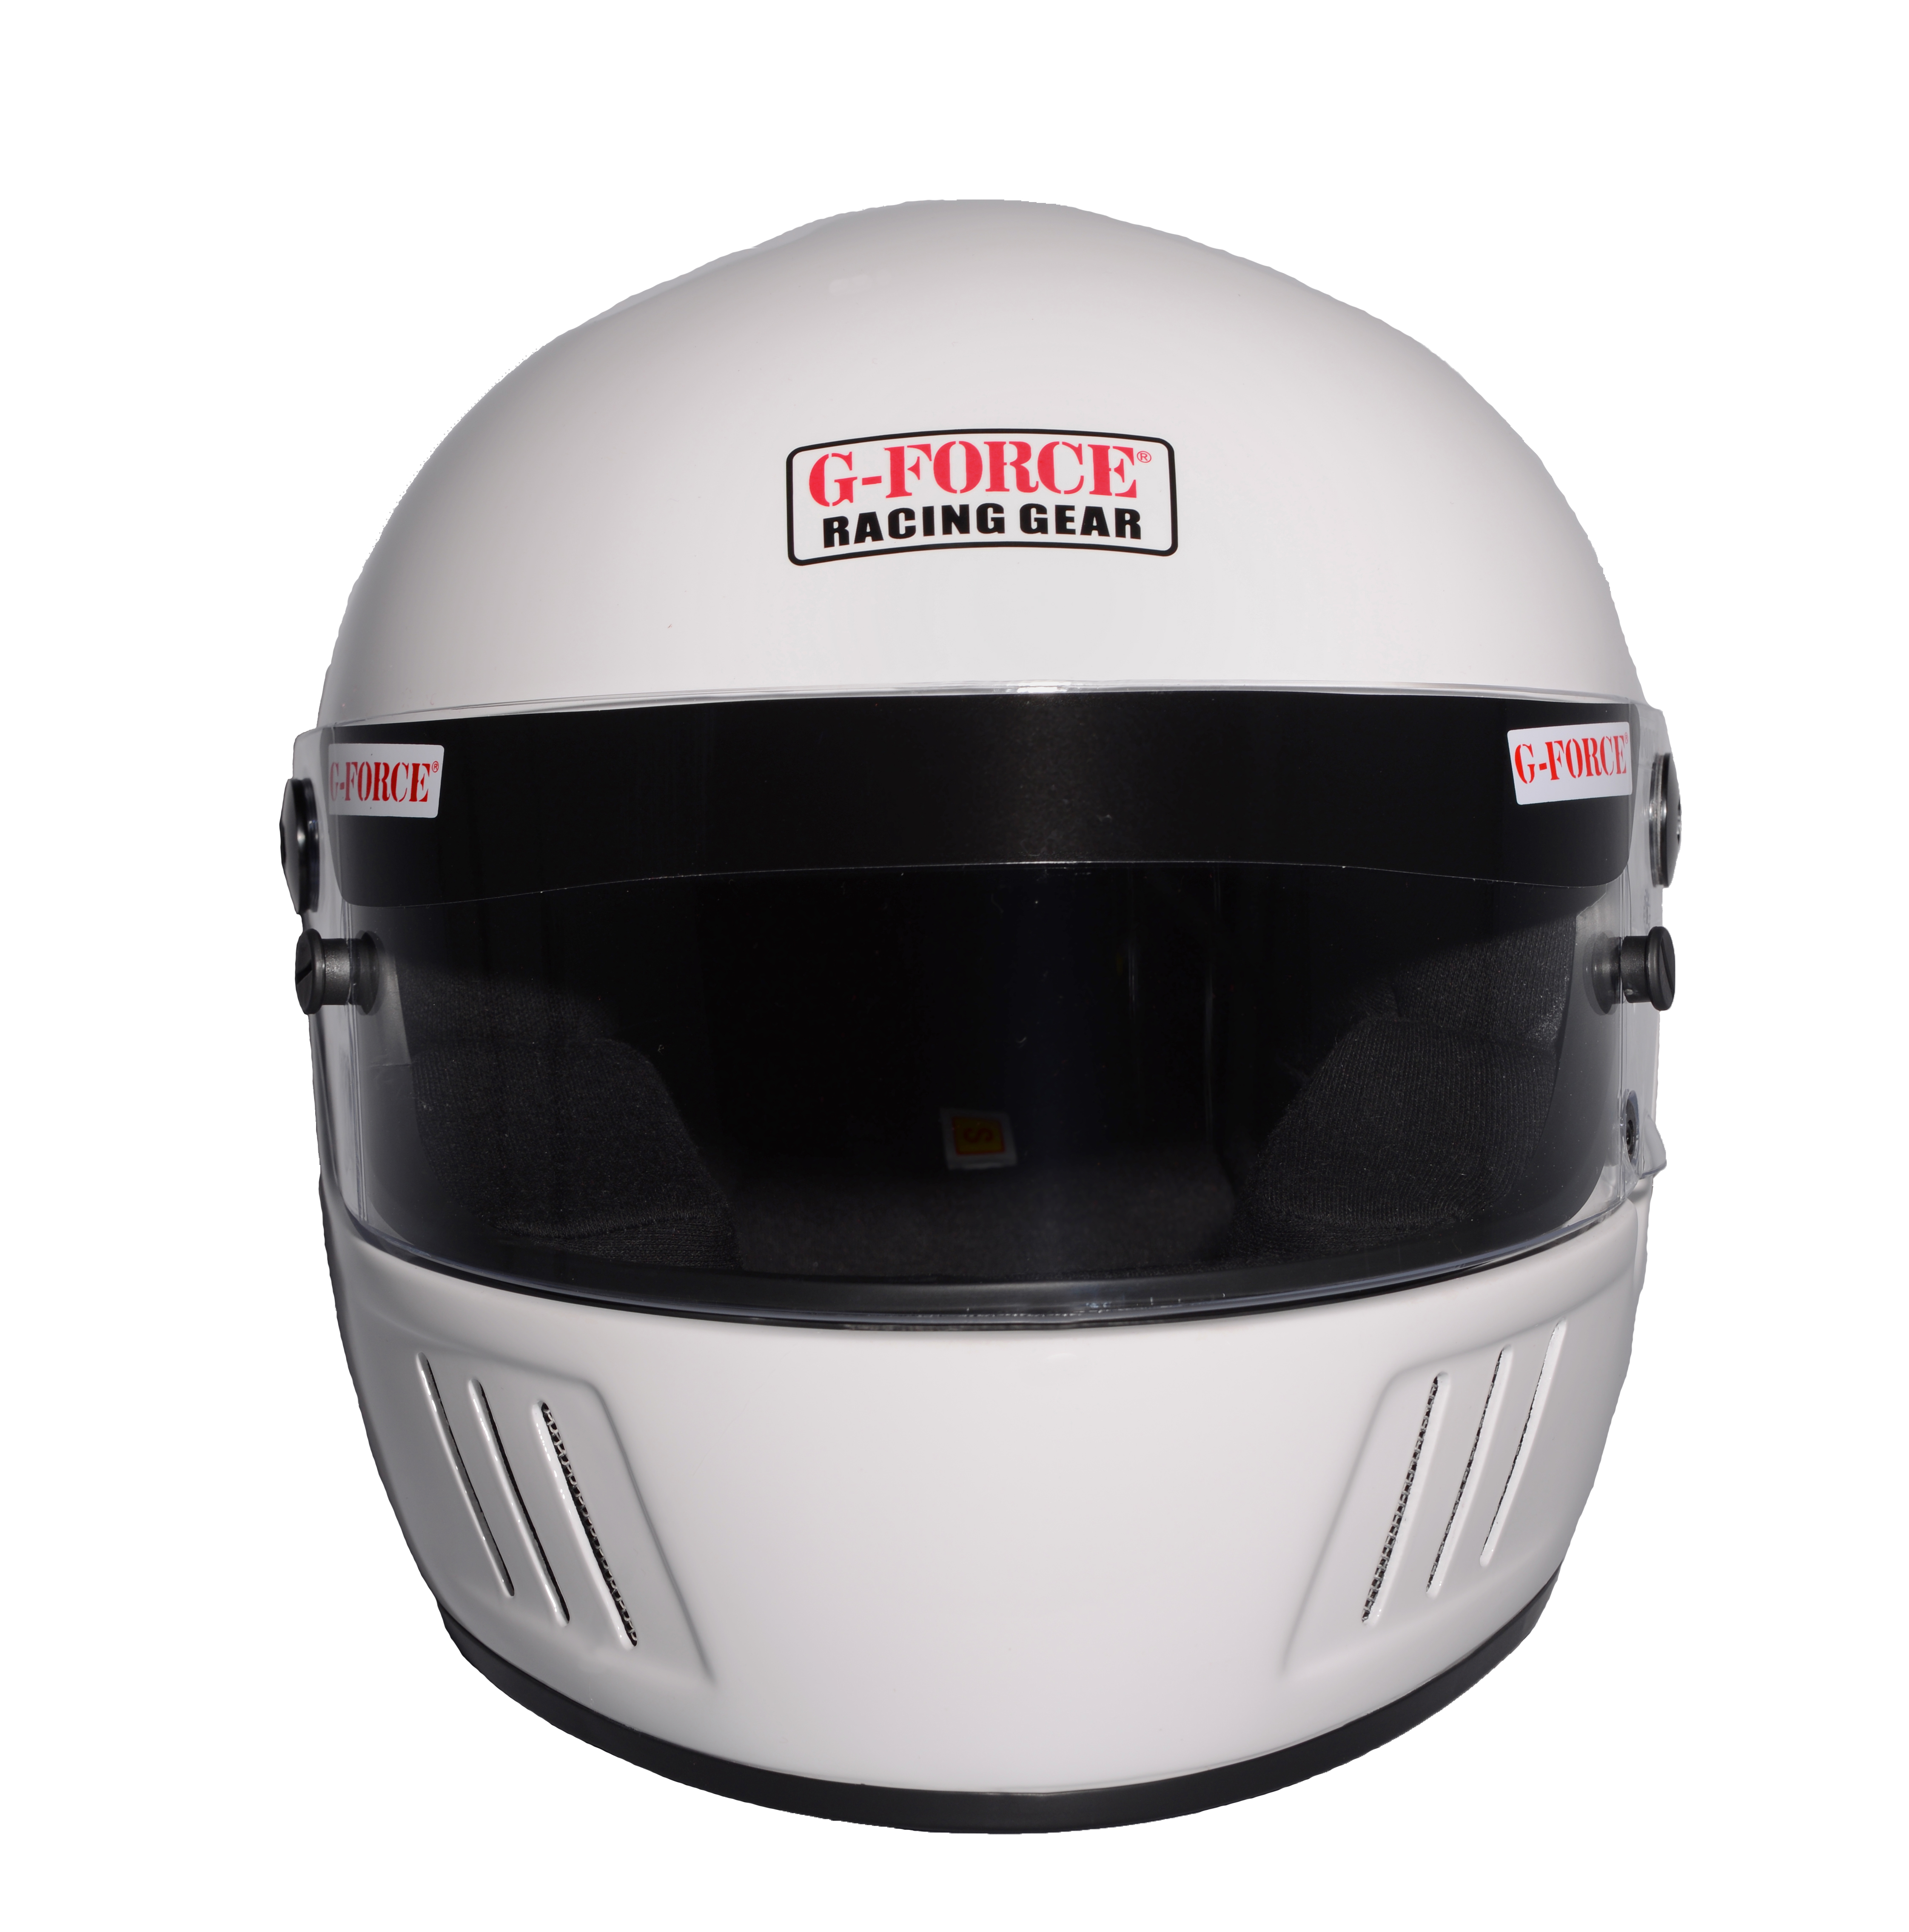 G-Force Racing Gear Helmet, PRO ELIMINATOR SA2010 FULL FACE LARGE WHITE